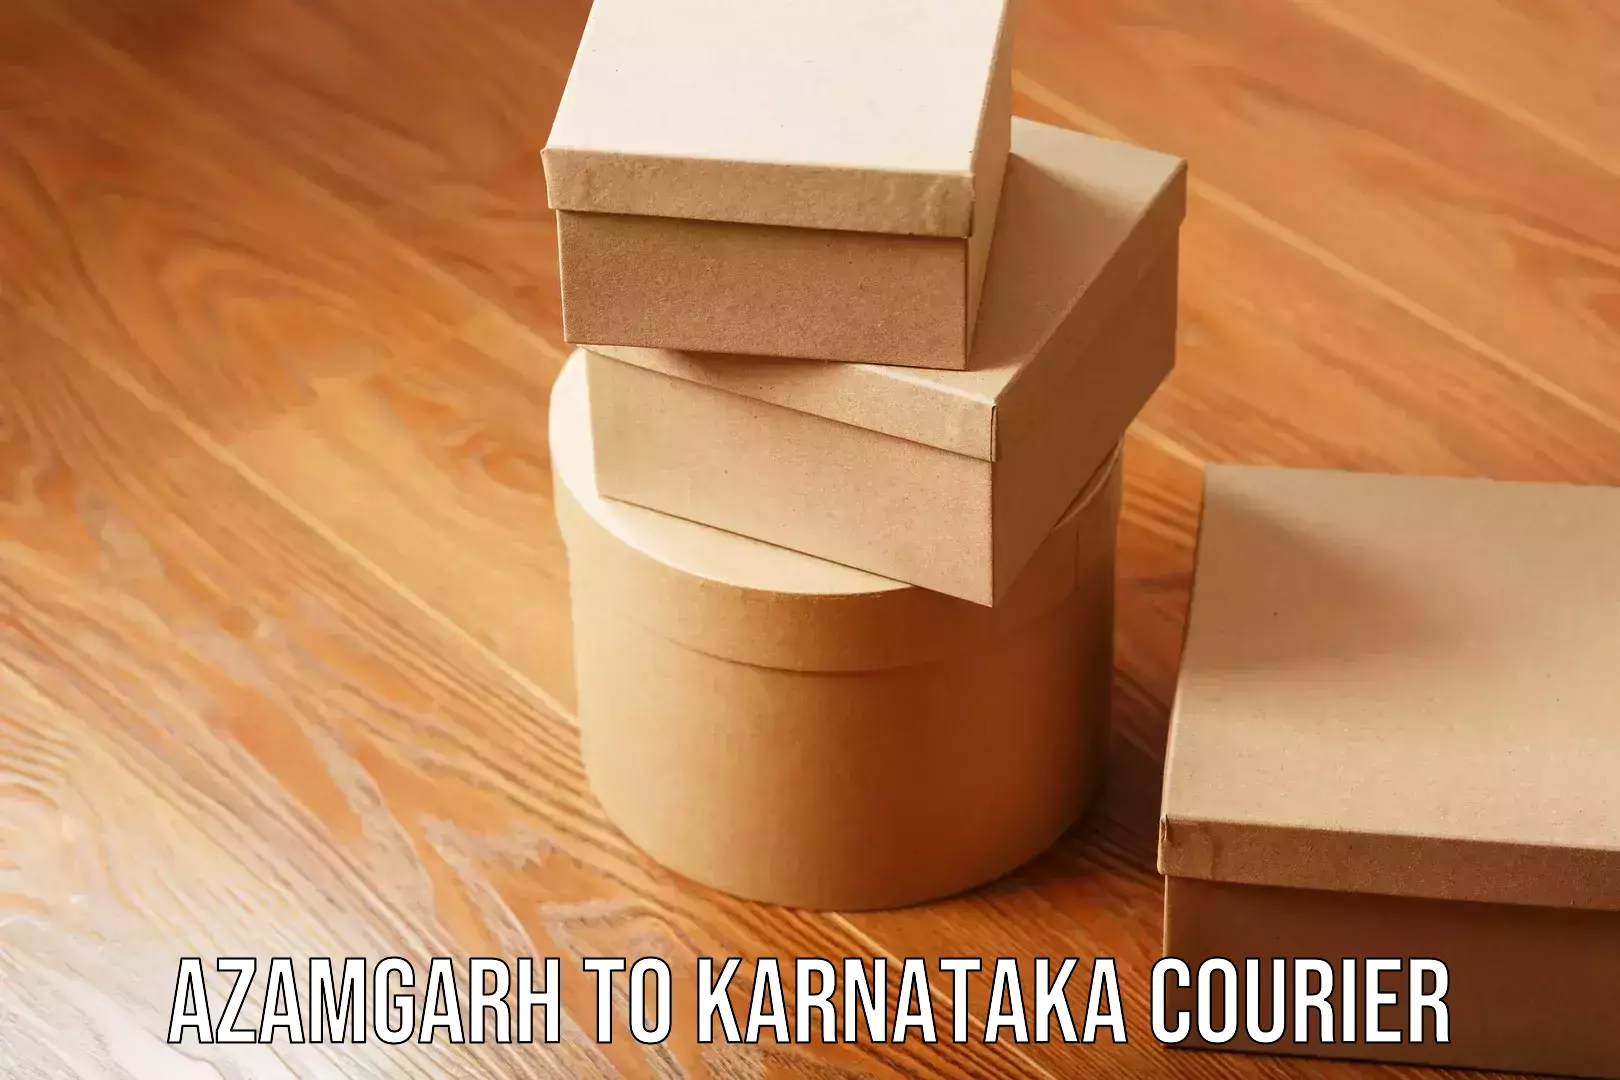 Smart shipping technology Azamgarh to Karnataka